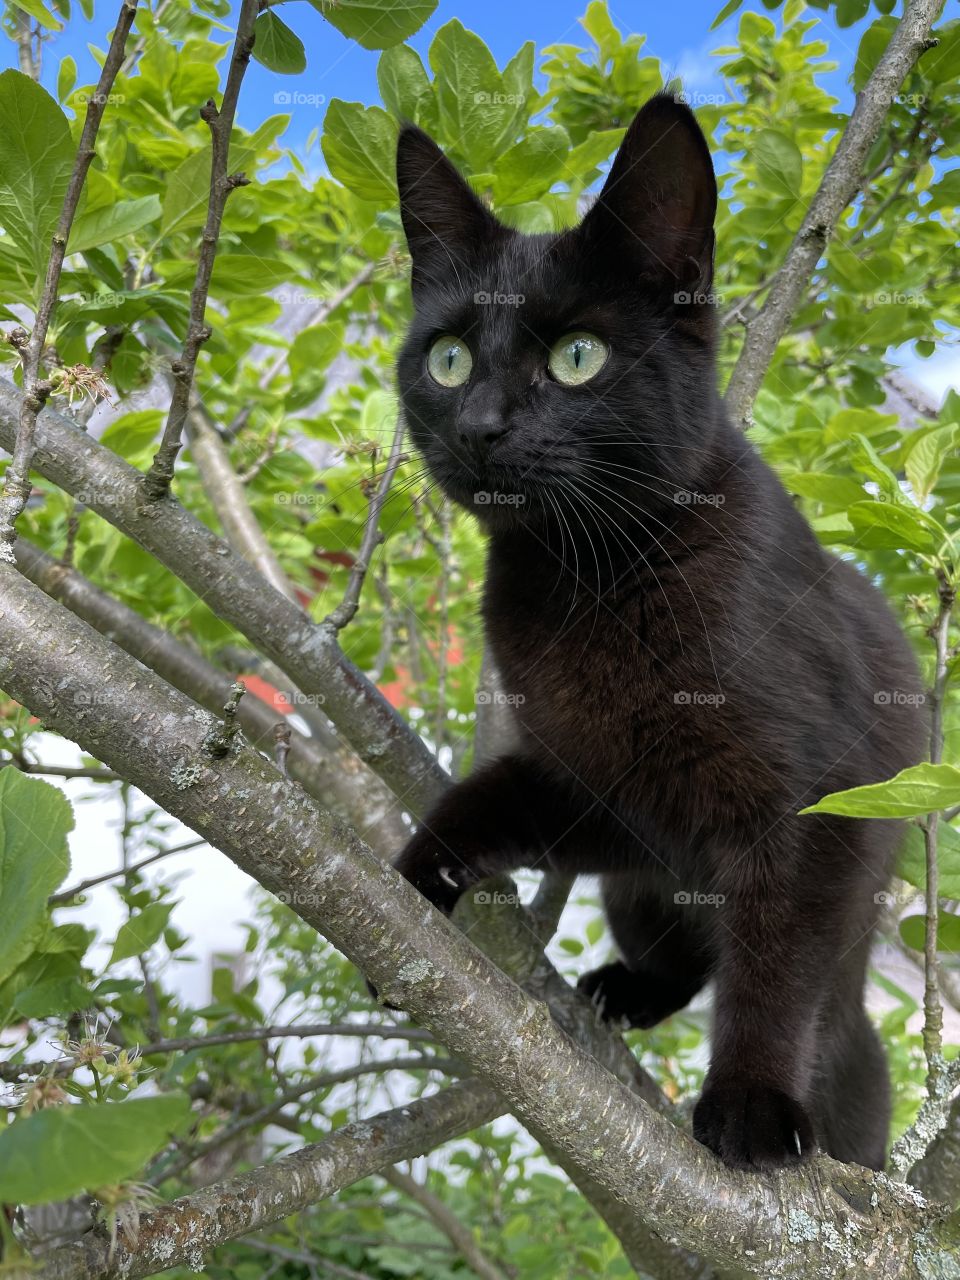 Black cat in a tree